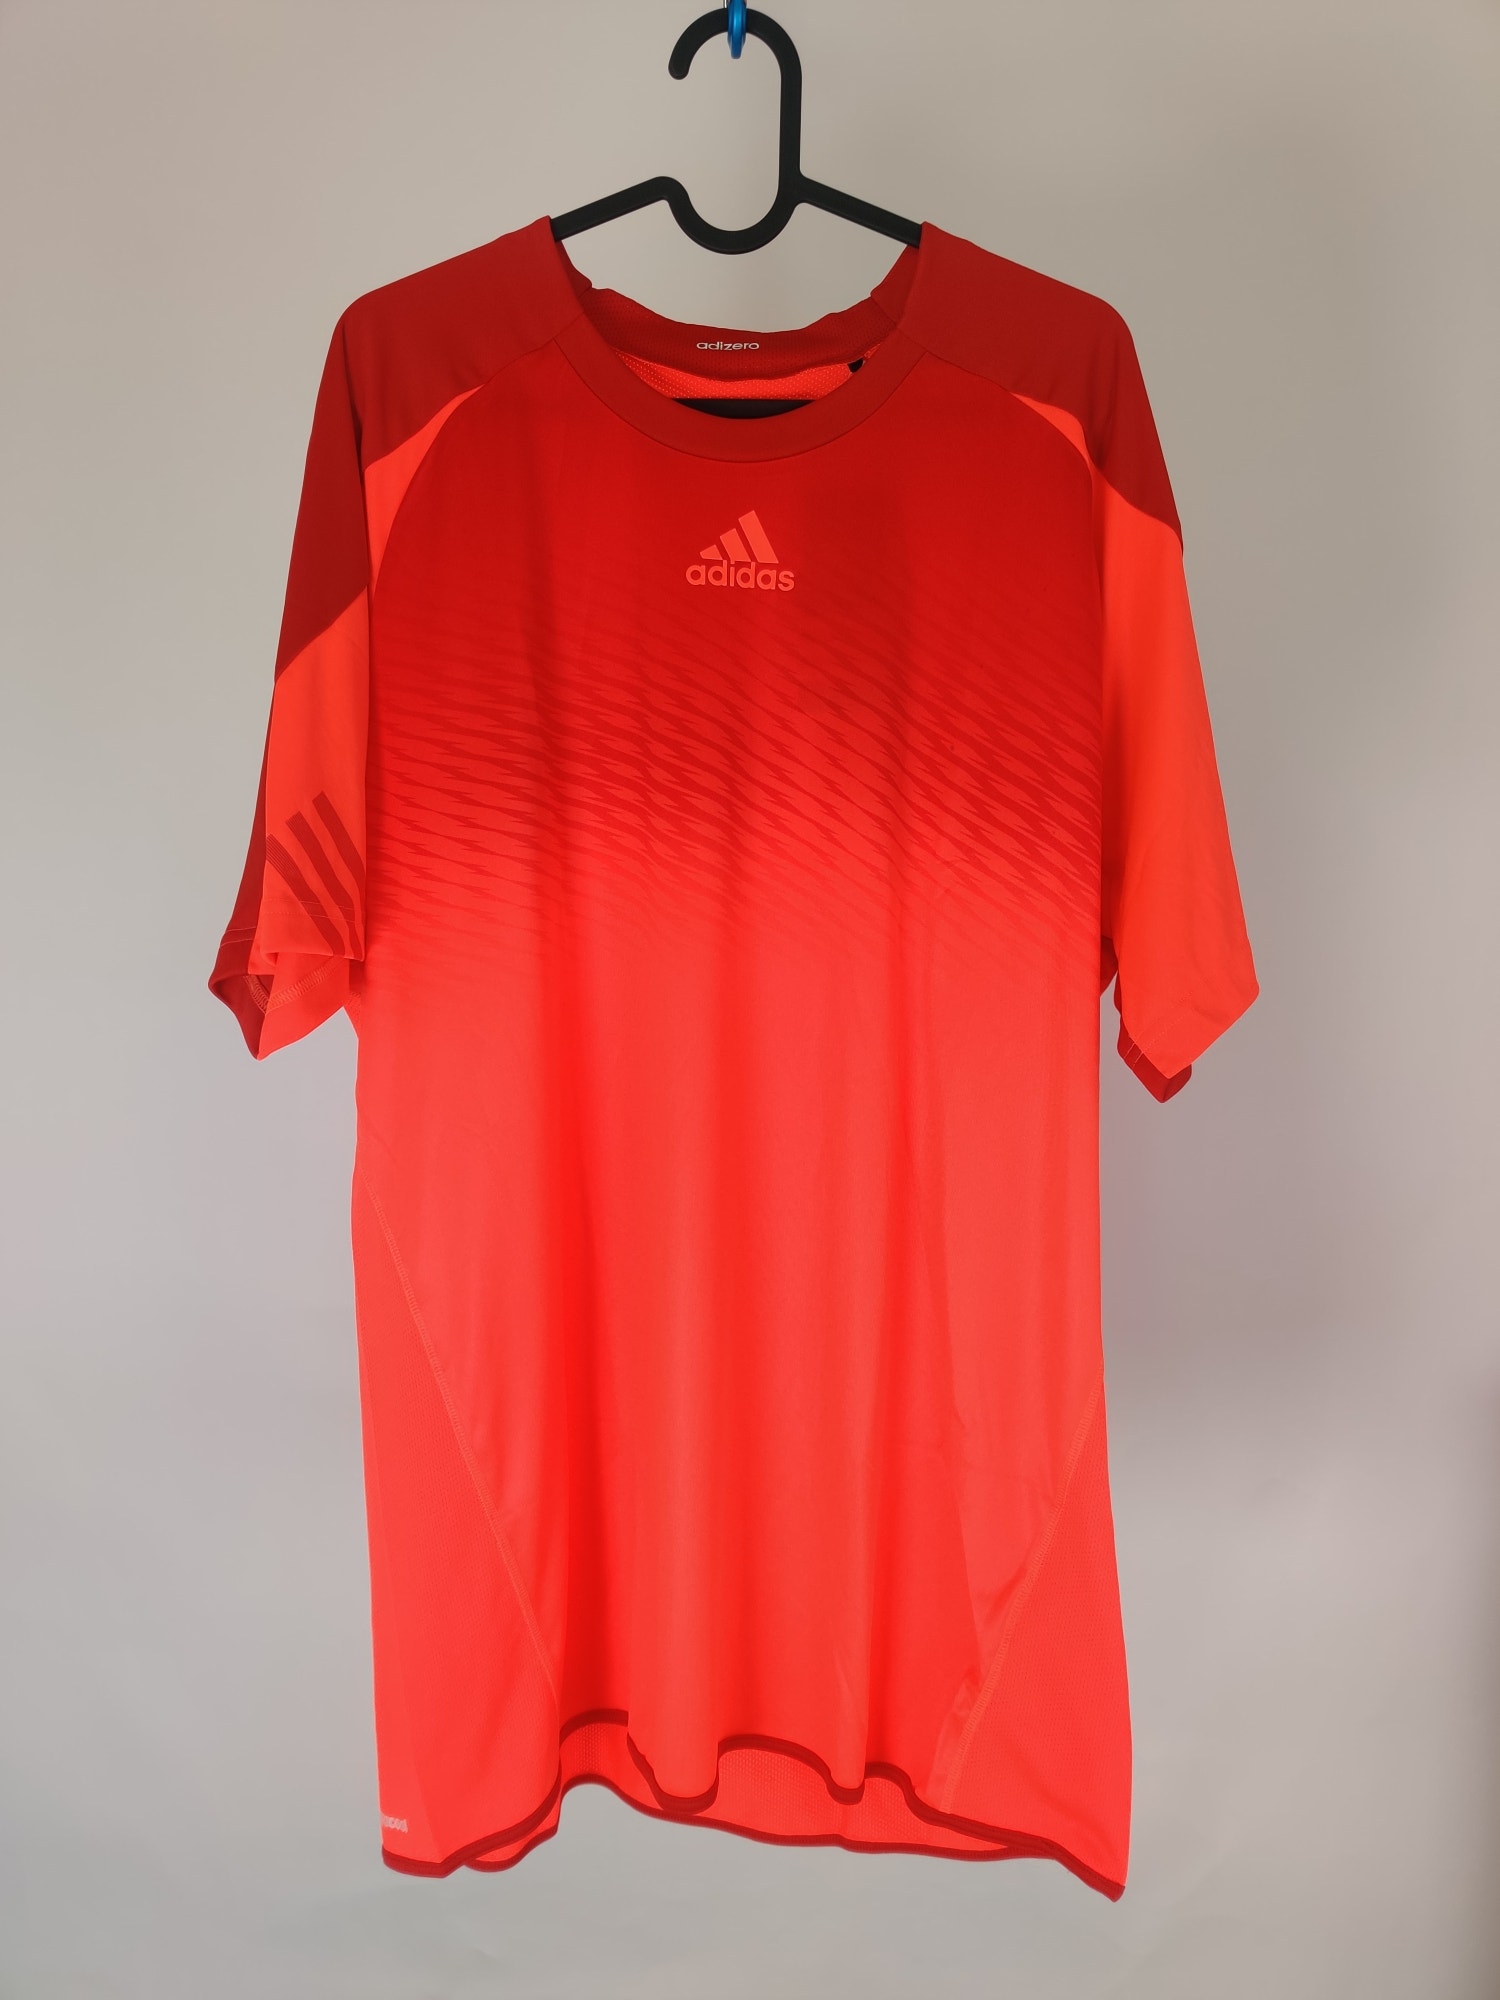 (V) adidas Adizero Mens Running T-Shirt Lightweight ORANGE Fitness Top - Picture 2 of 9